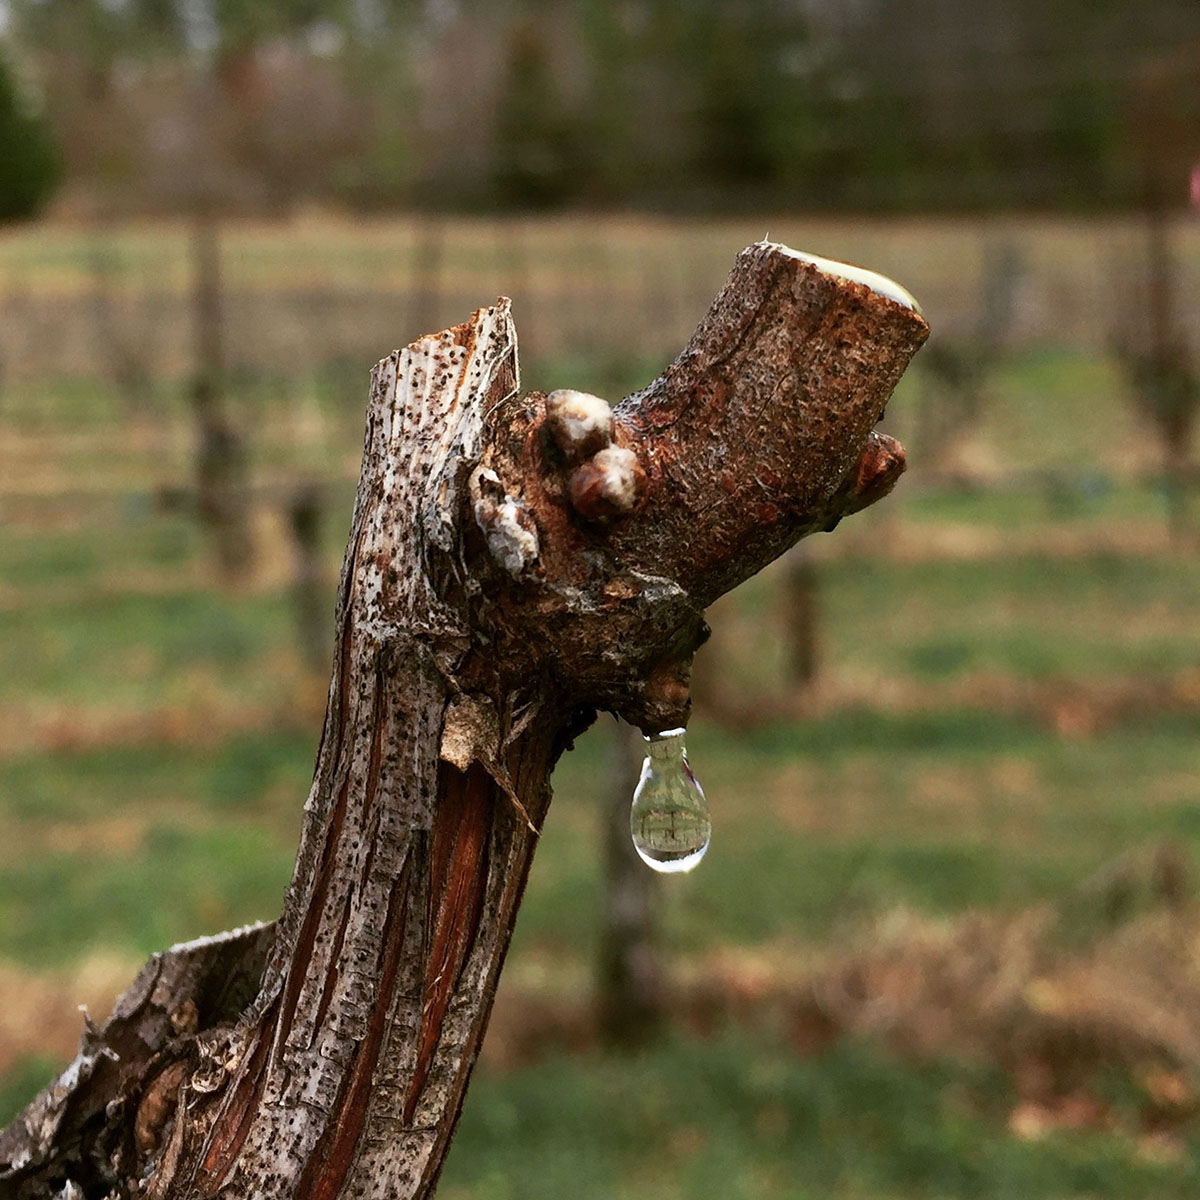 Pruned vine with drip of moisture.